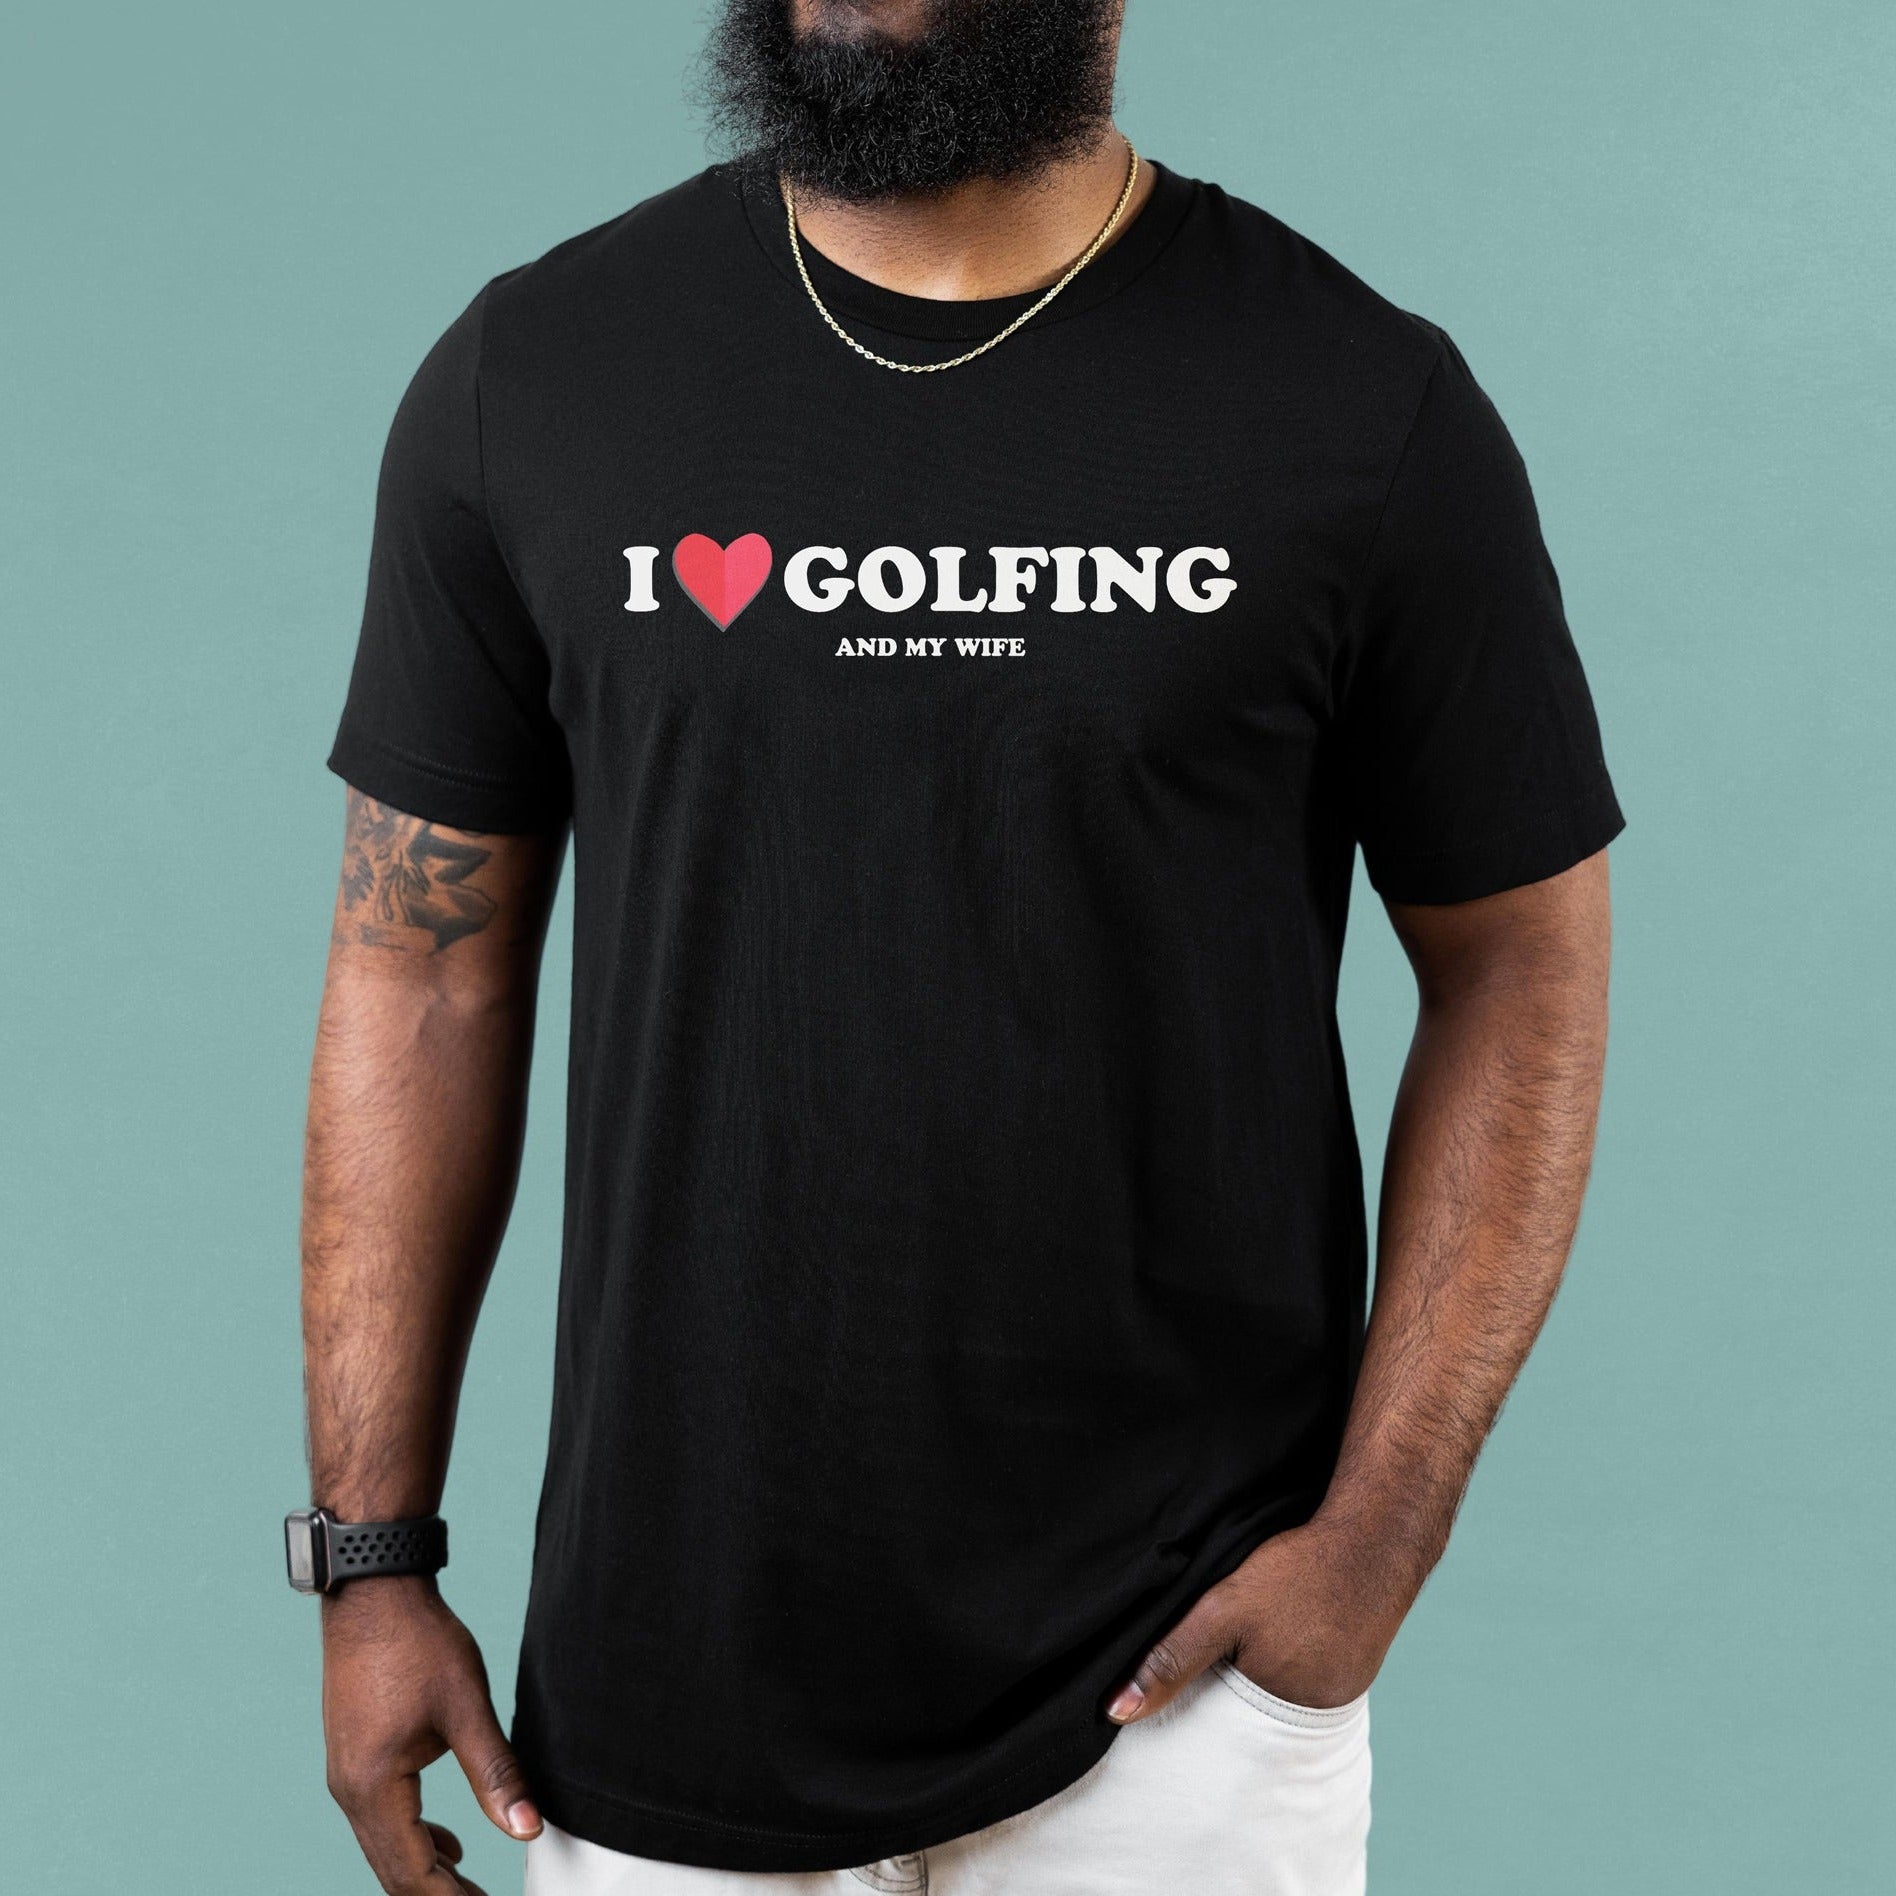 I Heart Golfing Garment-Dyed Tee